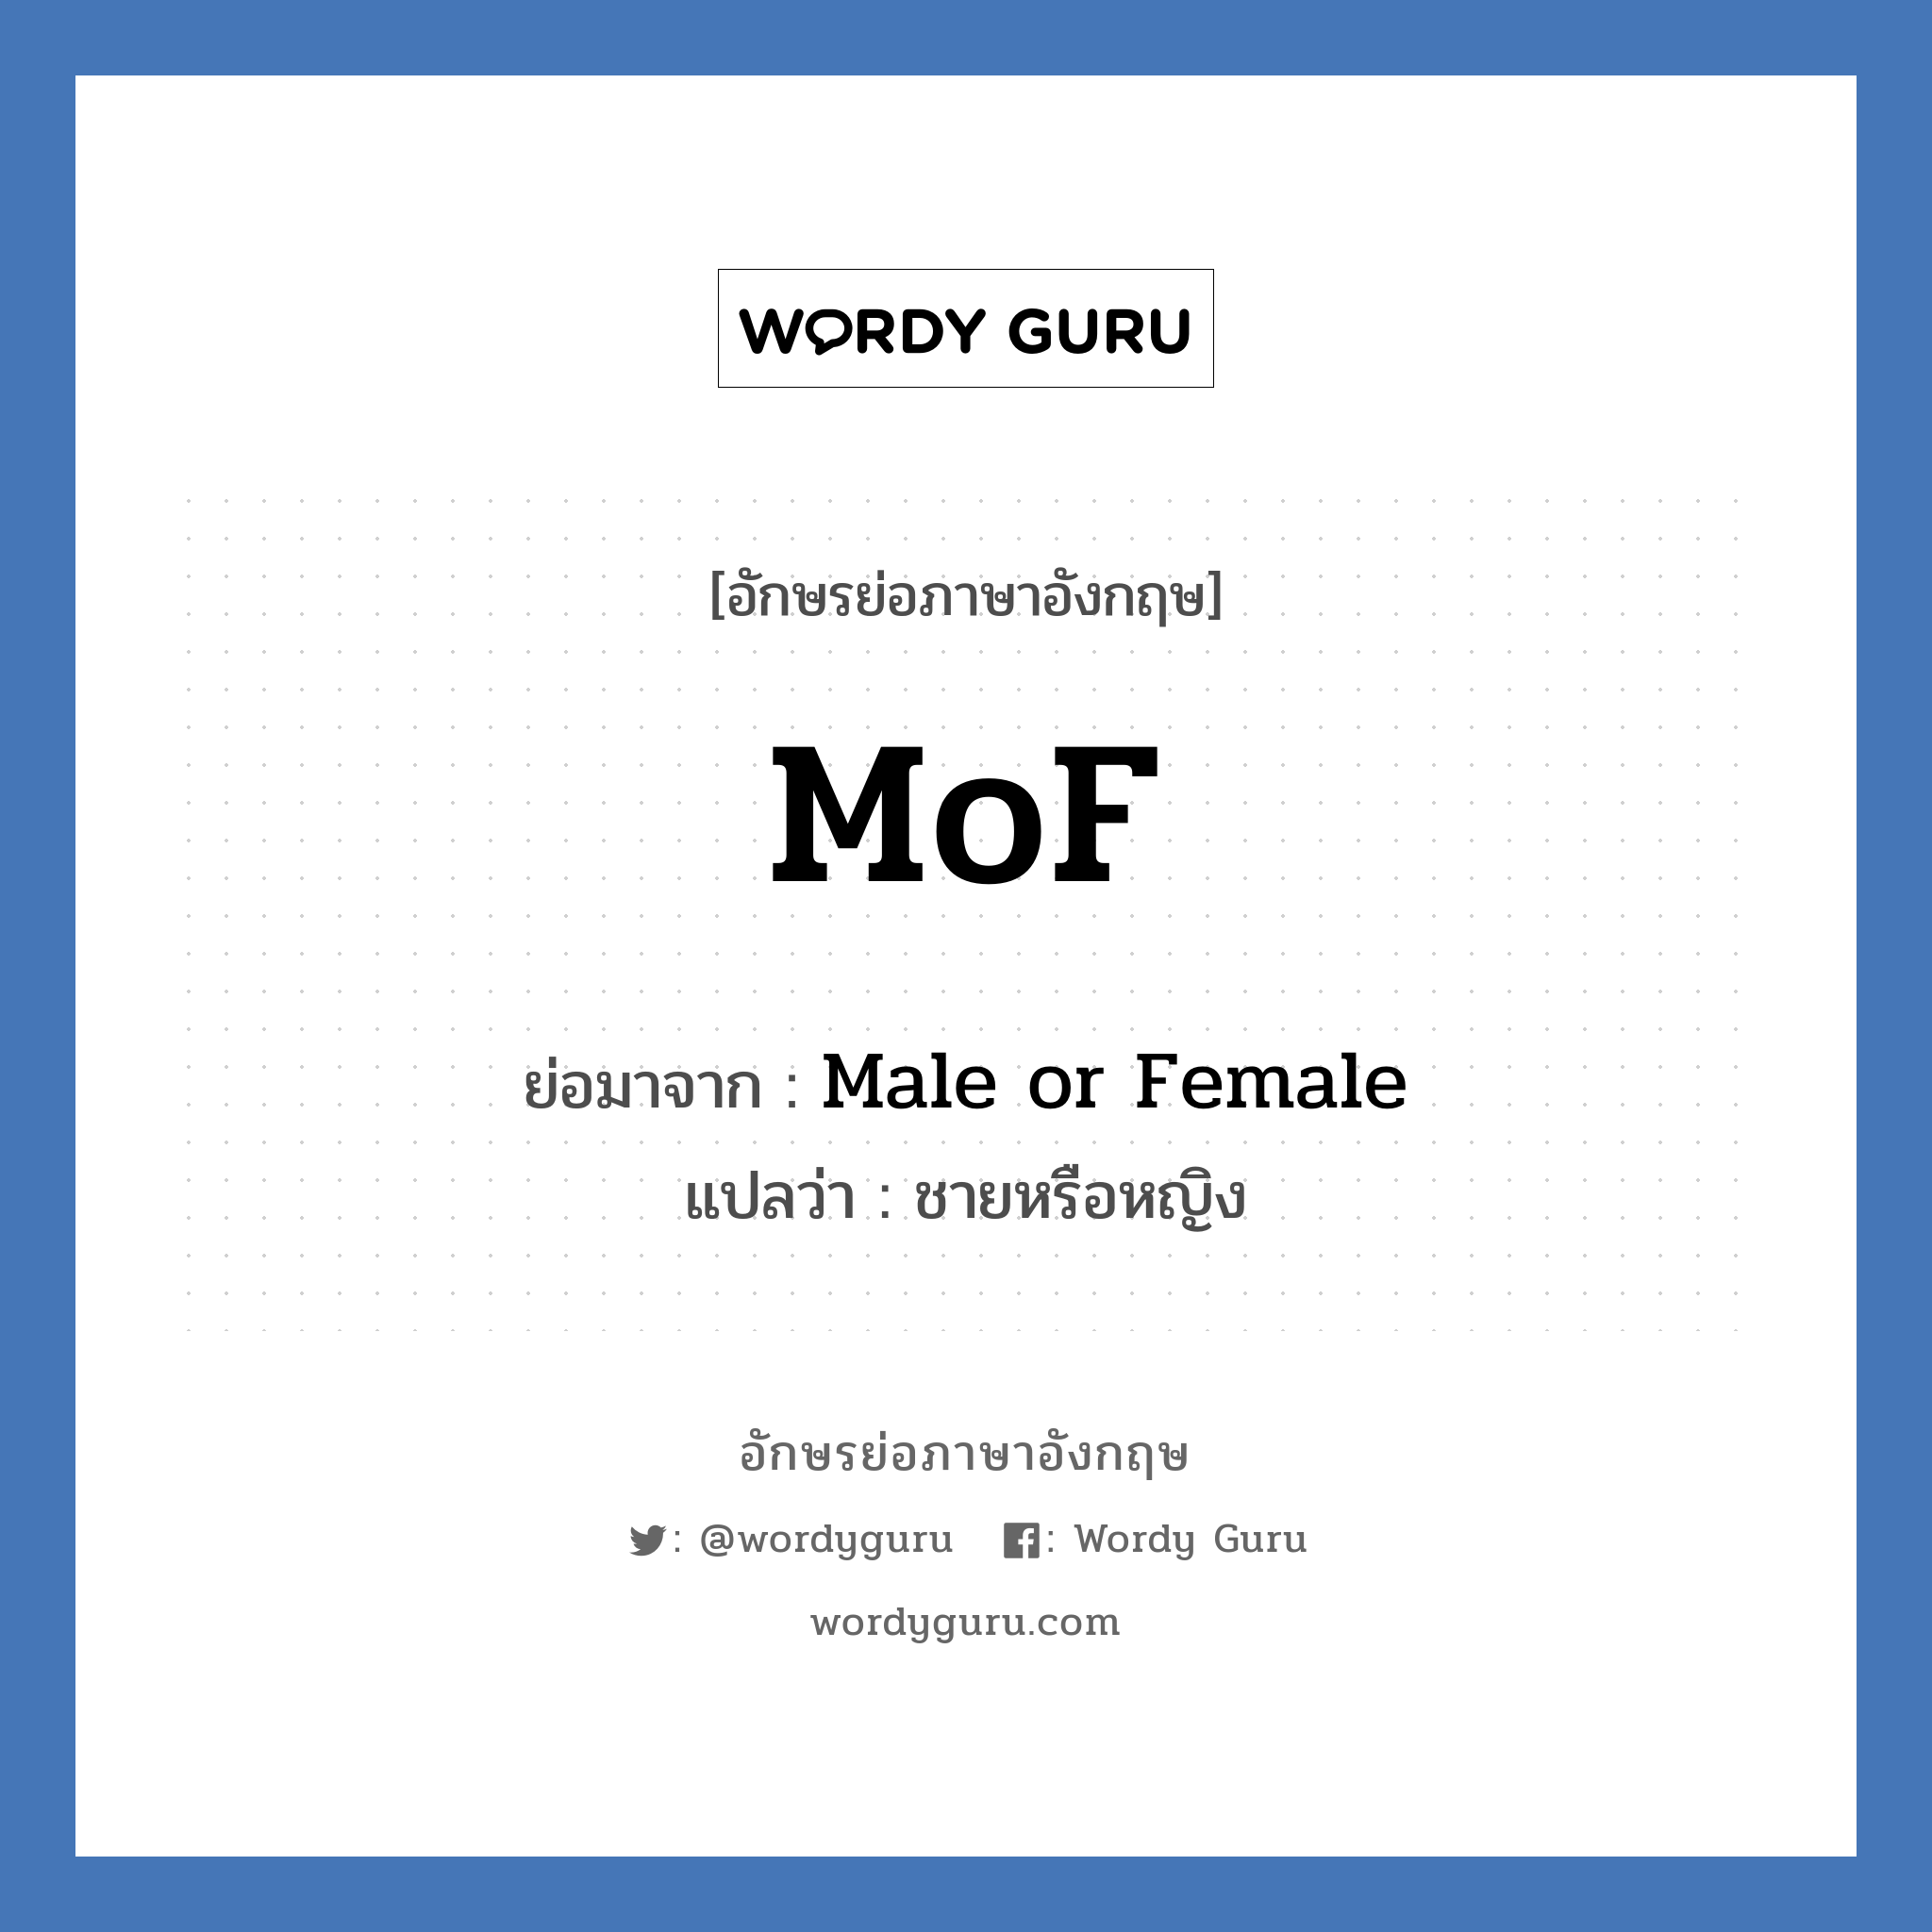 Male or Female คำย่อคือ? แปลว่า?, อักษรย่อภาษาอังกฤษ Male or Female ย่อมาจาก MoF แปลว่า ชายหรือหญิง